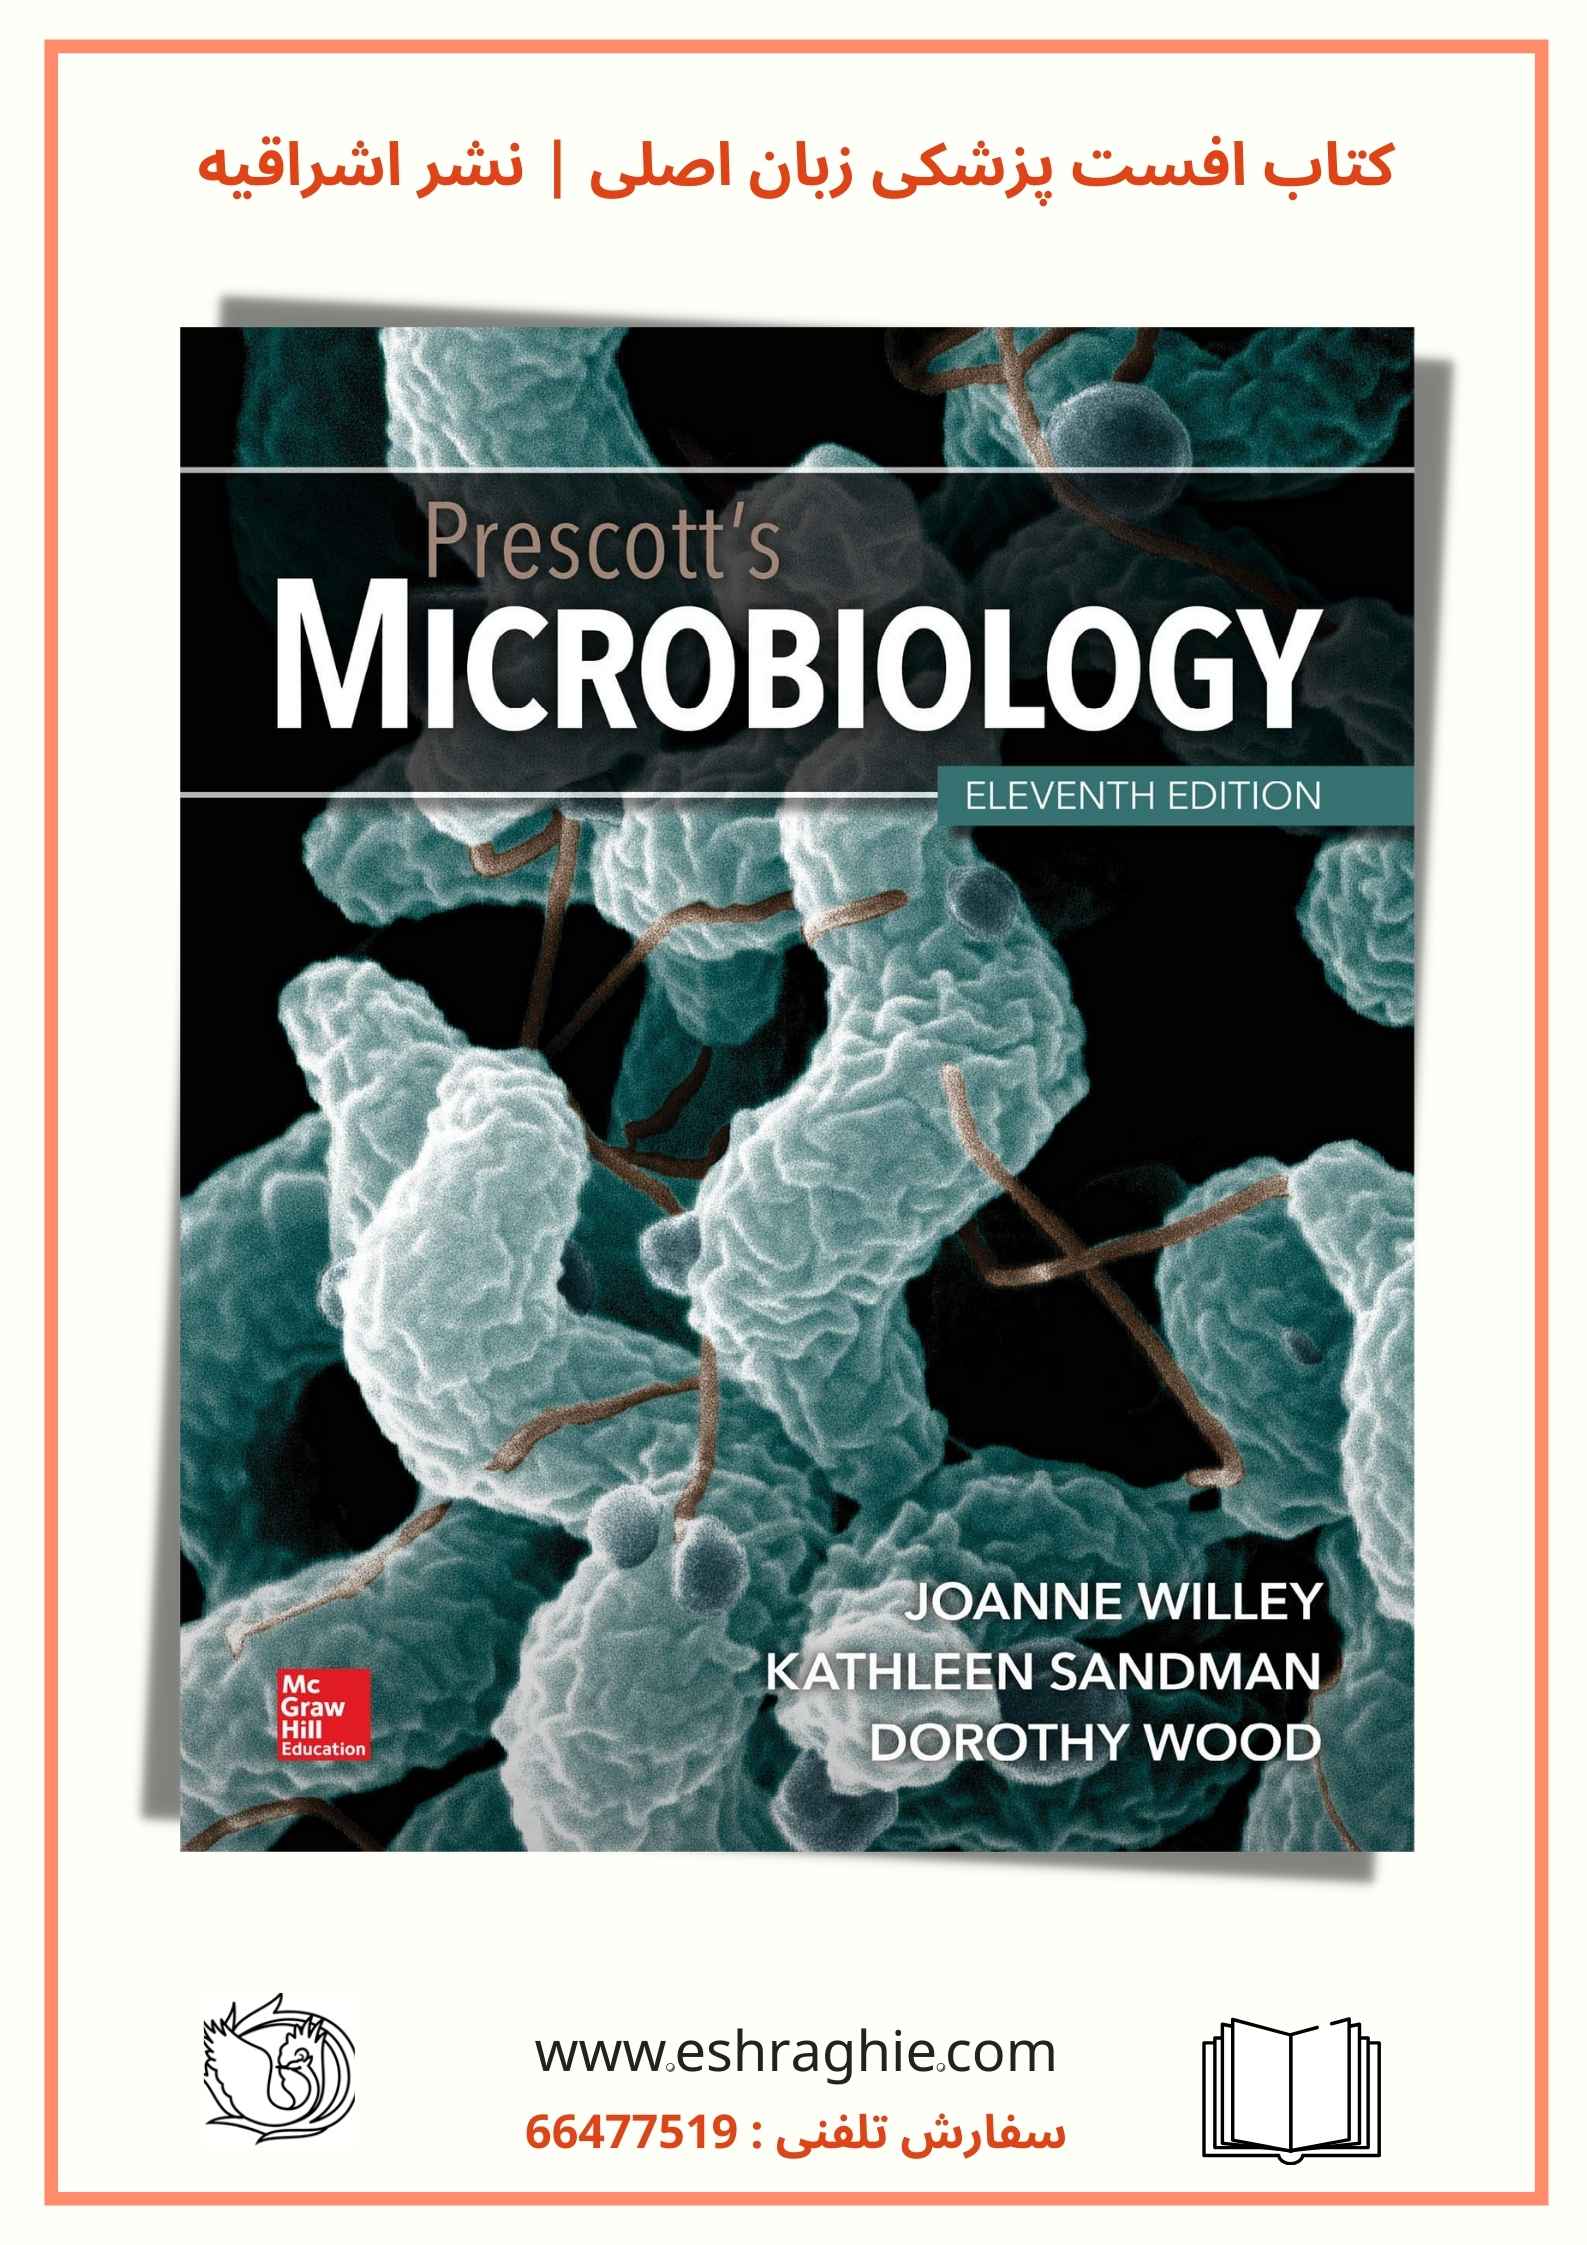 Prescott's Microbiology 11th Edition | میکروبیولوژی پرسکات 2020